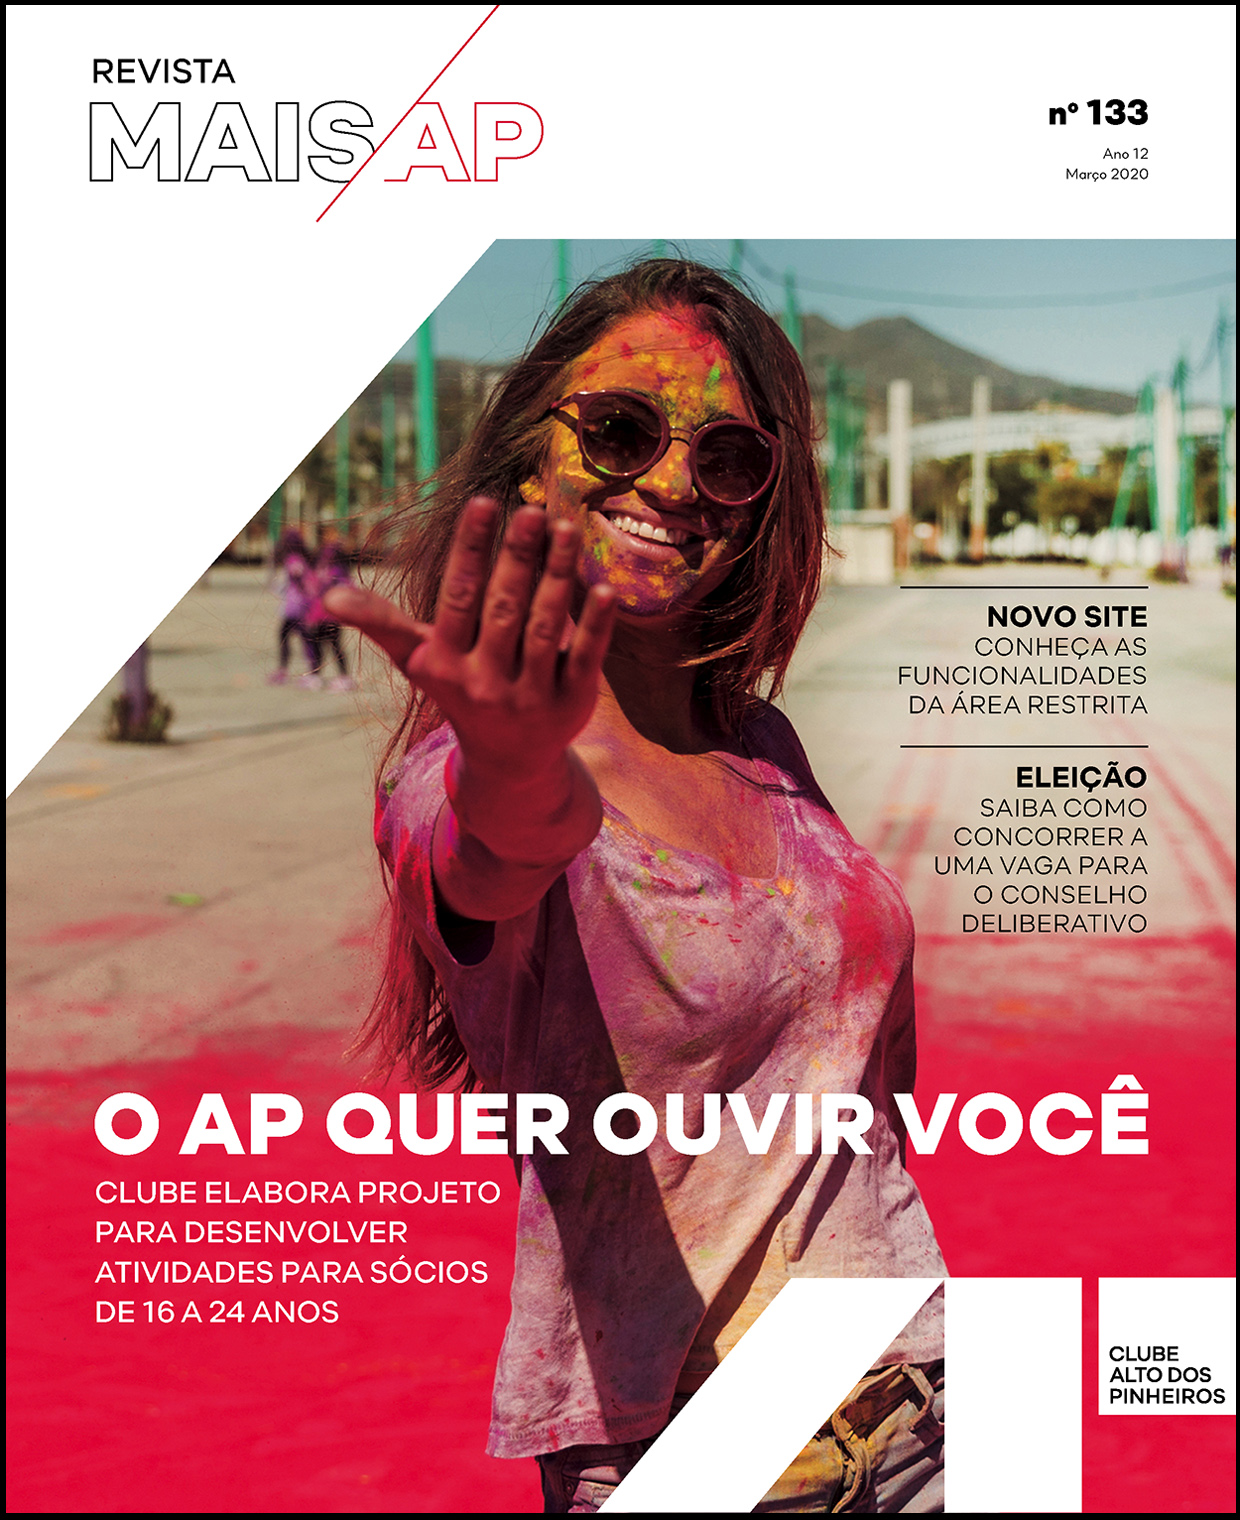 https://www.clubeap.com.br/wp-content/uploads/2020/03/capa-revistamaisap133-site.jpg